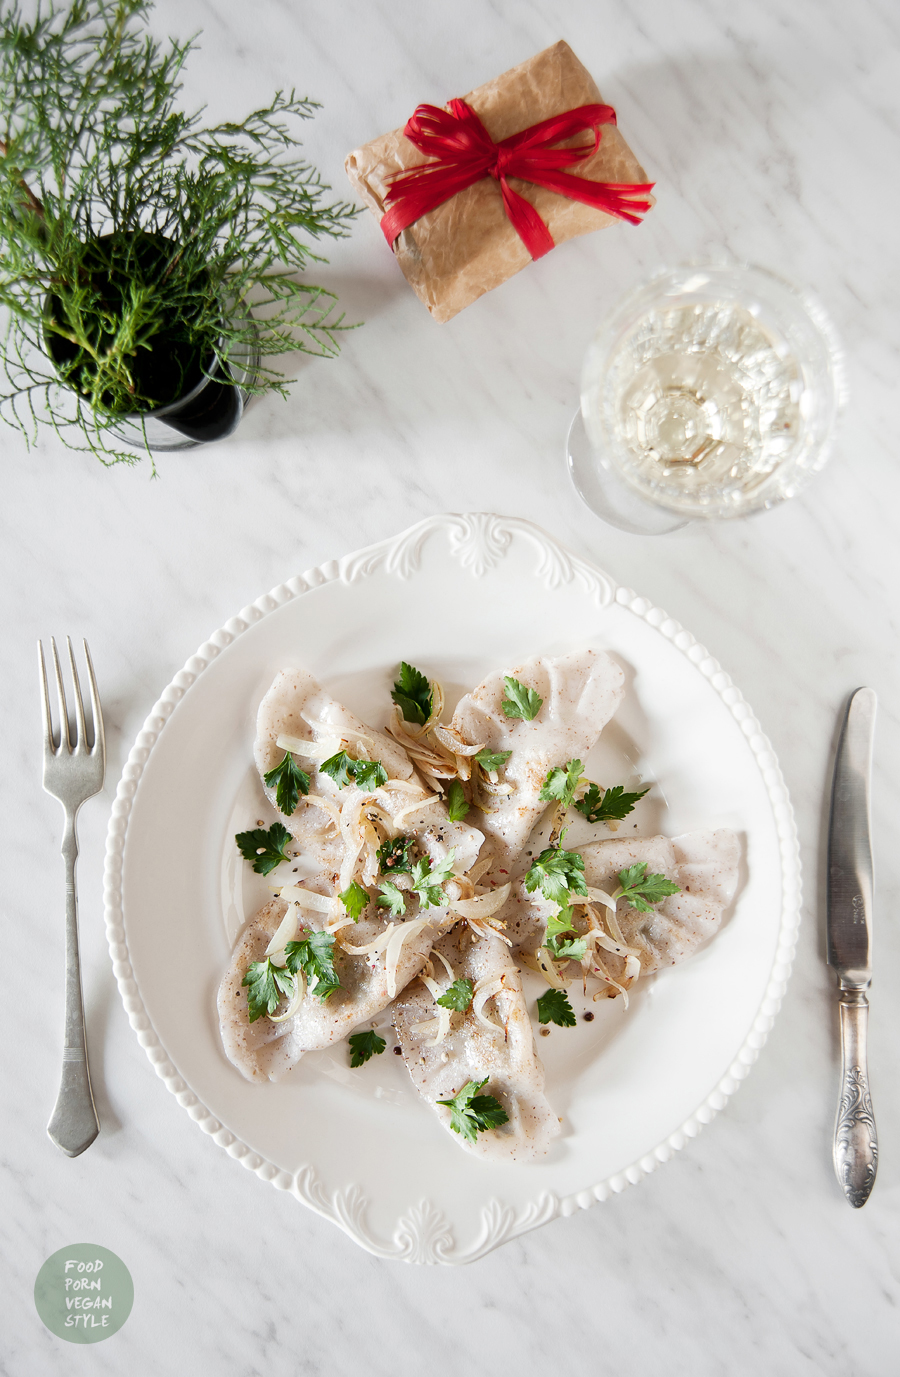 Gluten-free vegan polish style dumplings with sauerkraut and wild mushrooms